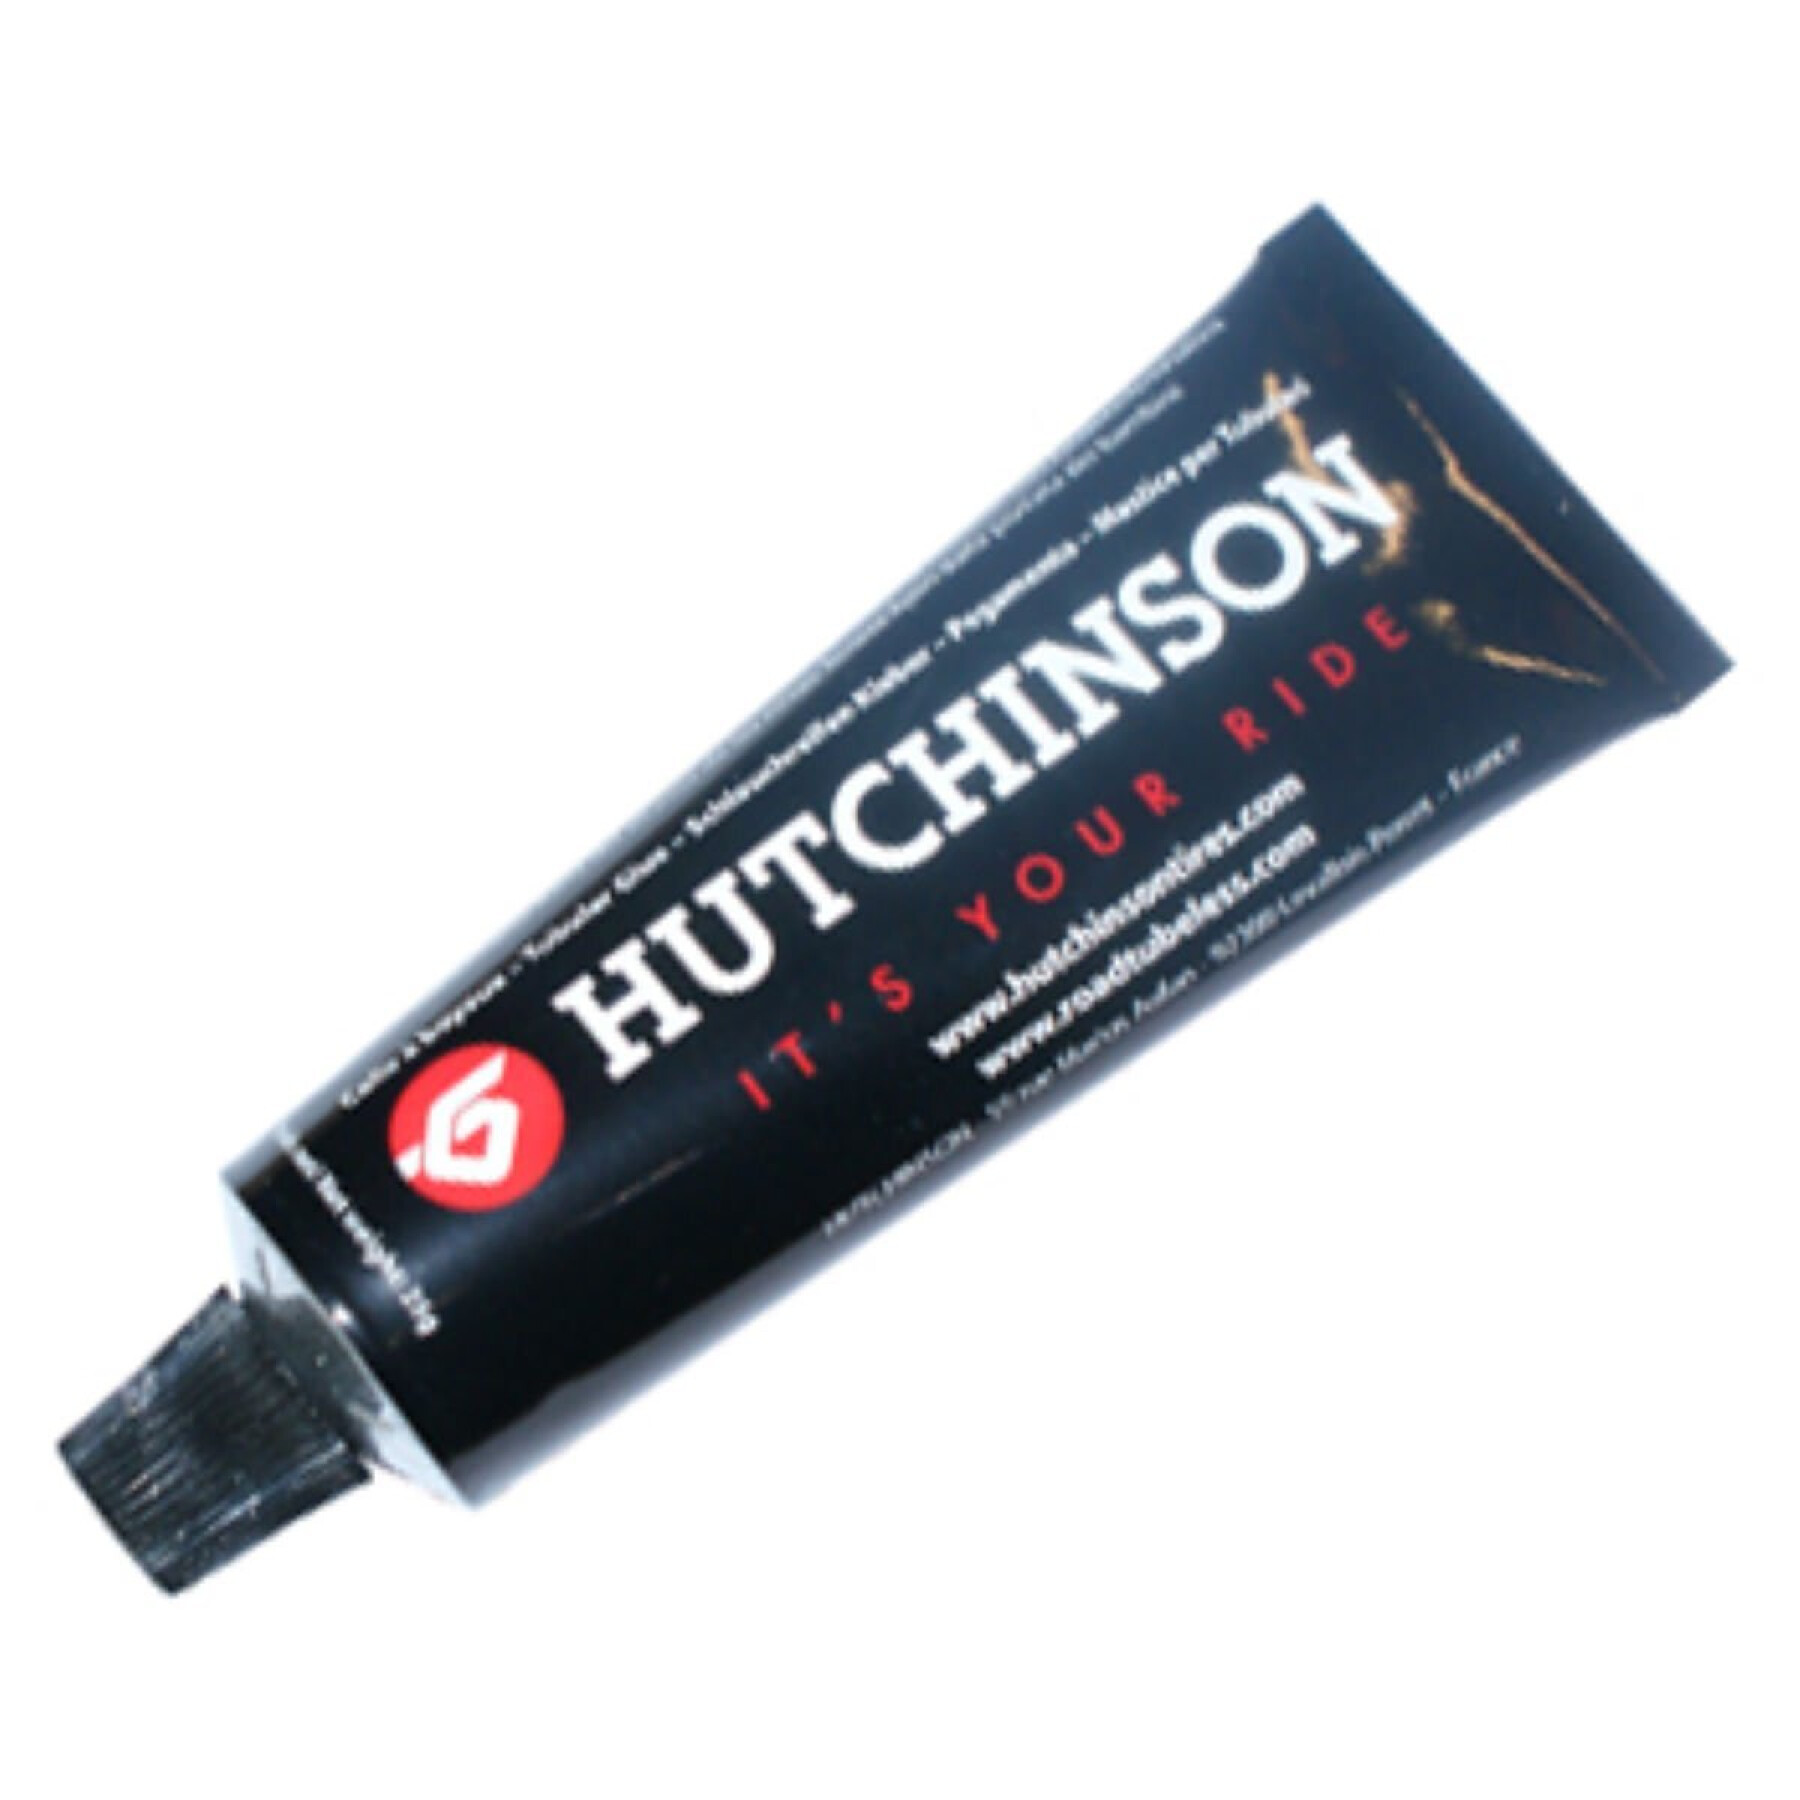 Box of 12 tubes of hose glue Hutchinson